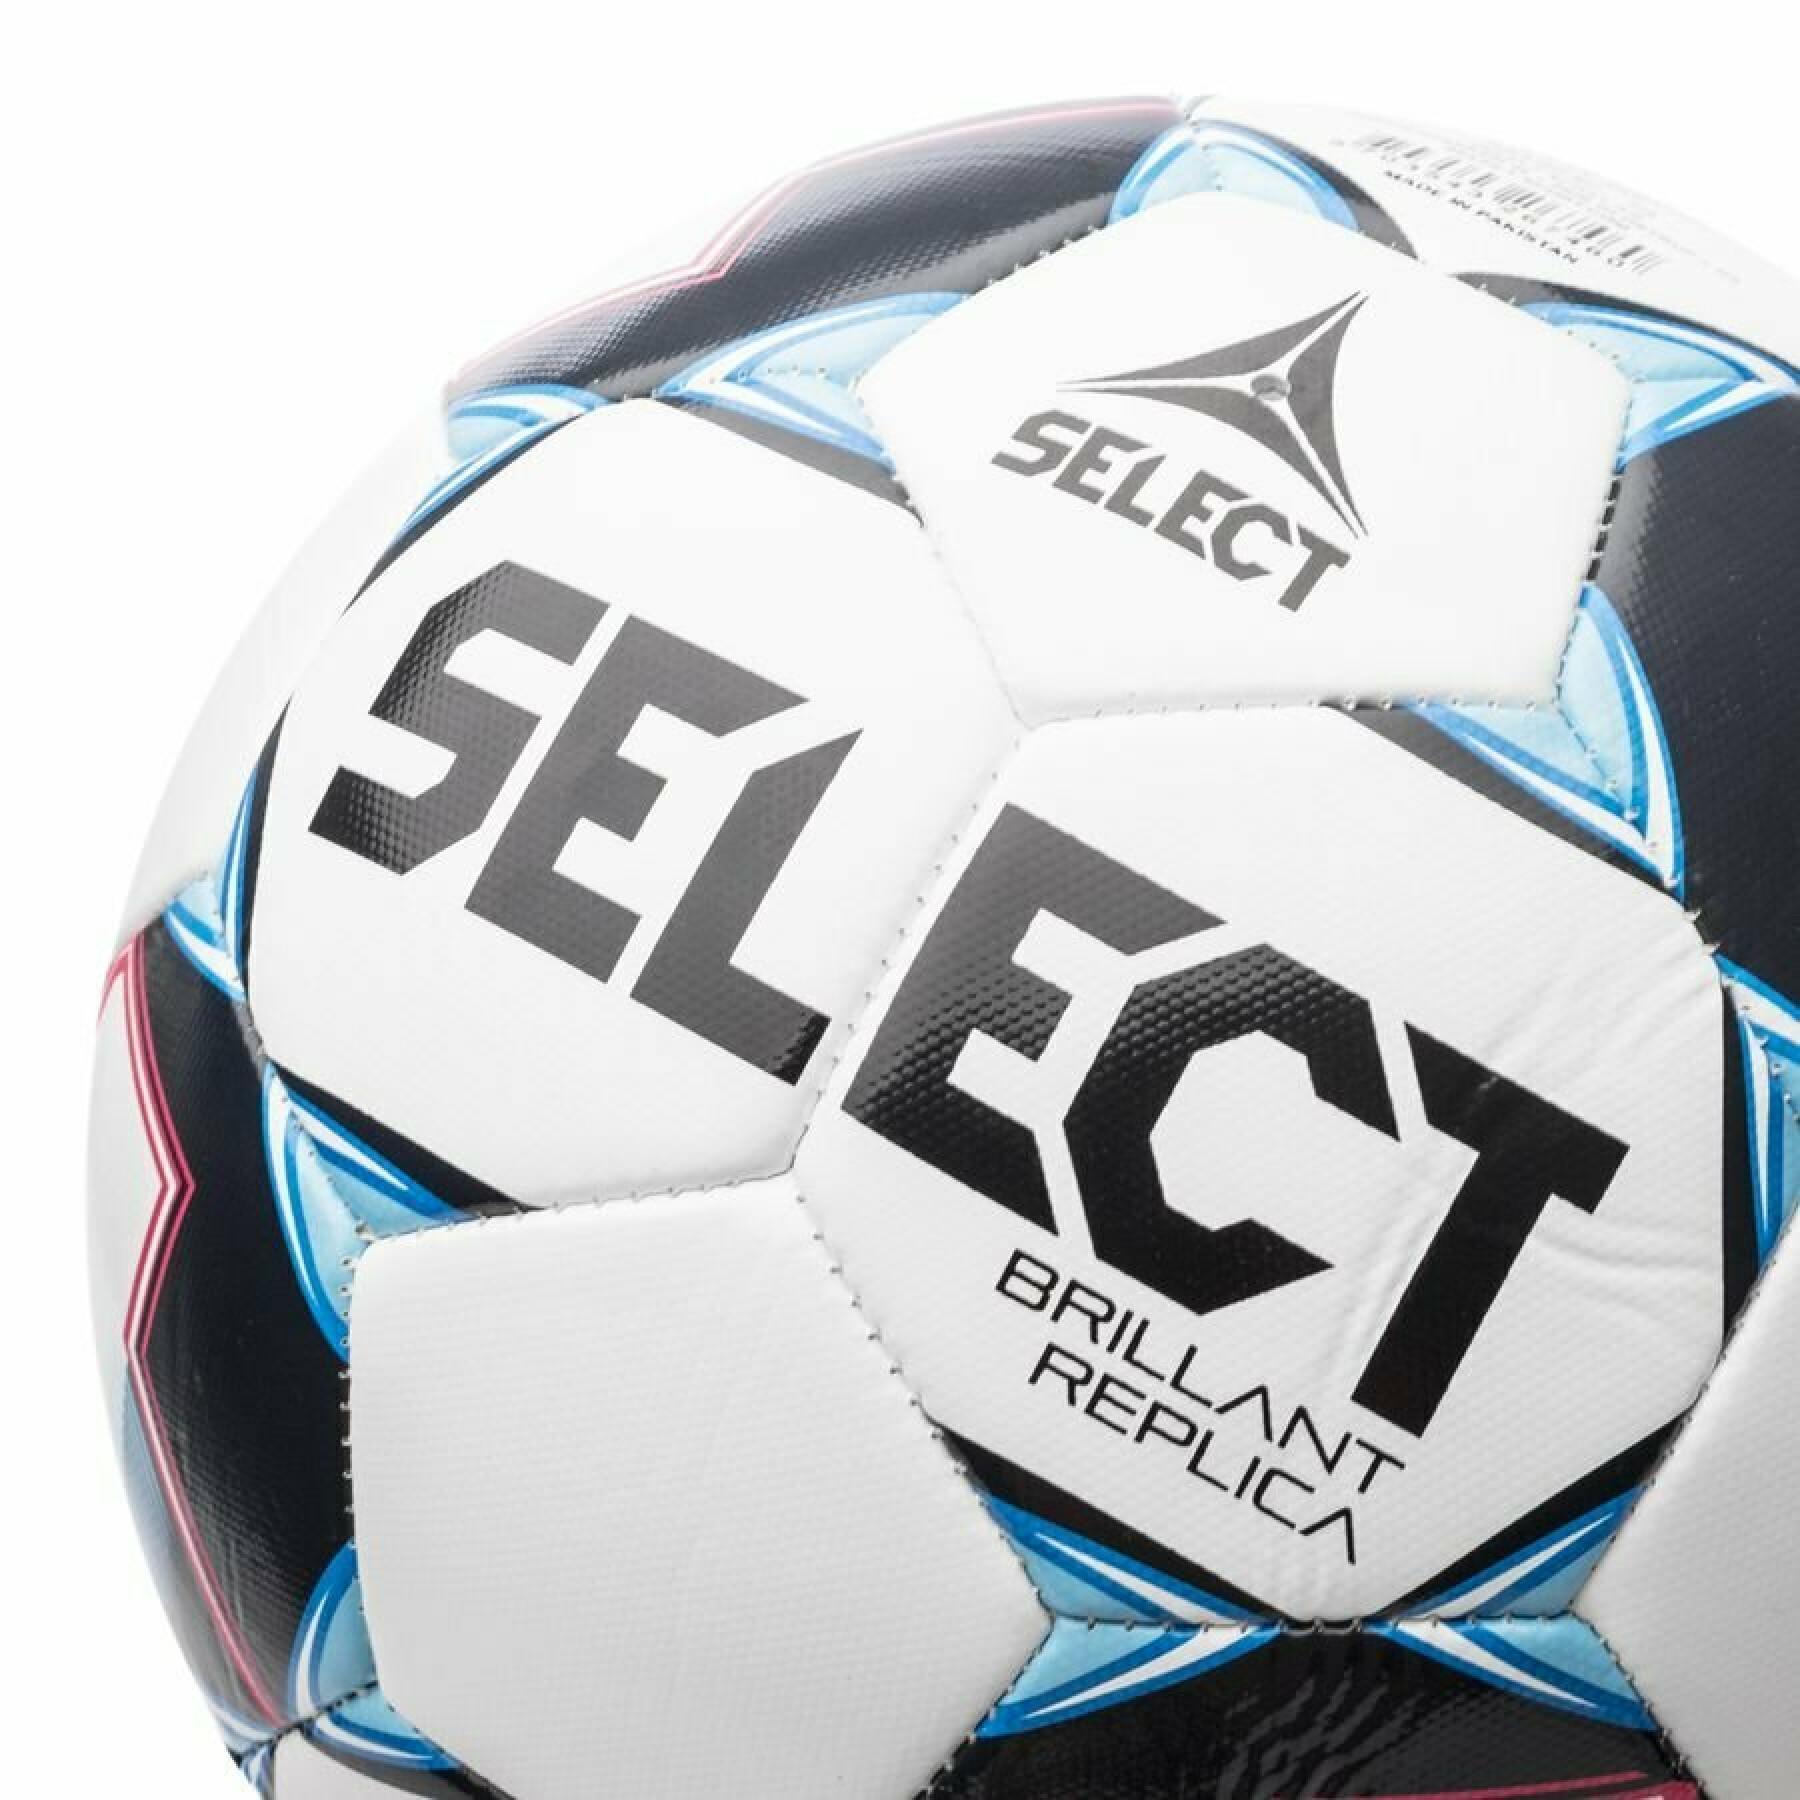 Ballong Select Brillant Replica V21